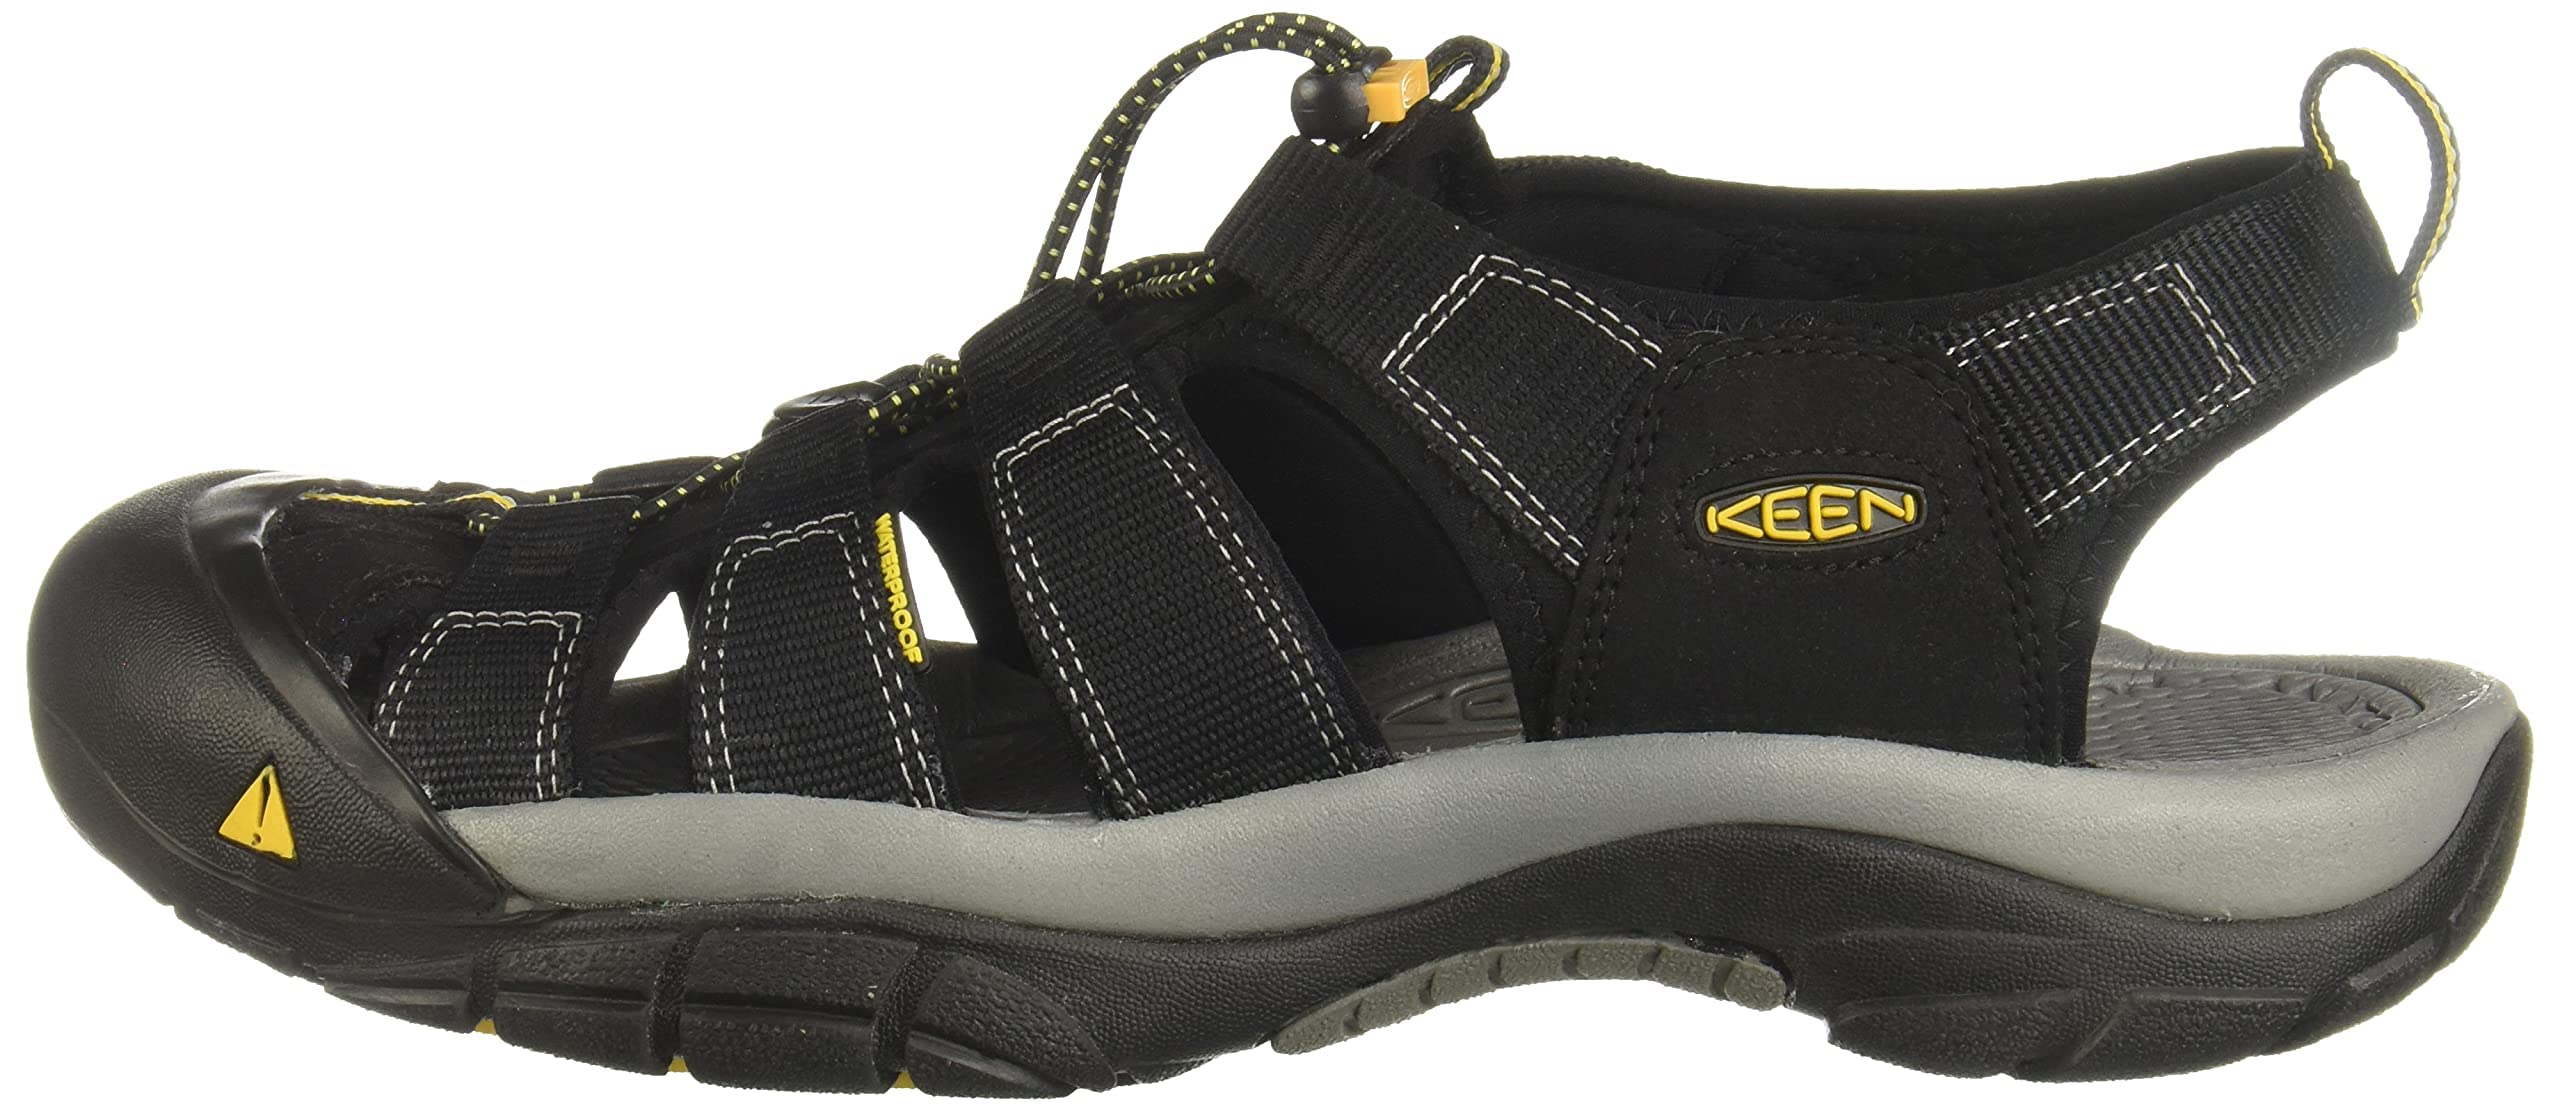 KEEN Men's Newport H2 Closed Toe Water Sandals, Black/Steel Grey, 8.5 US